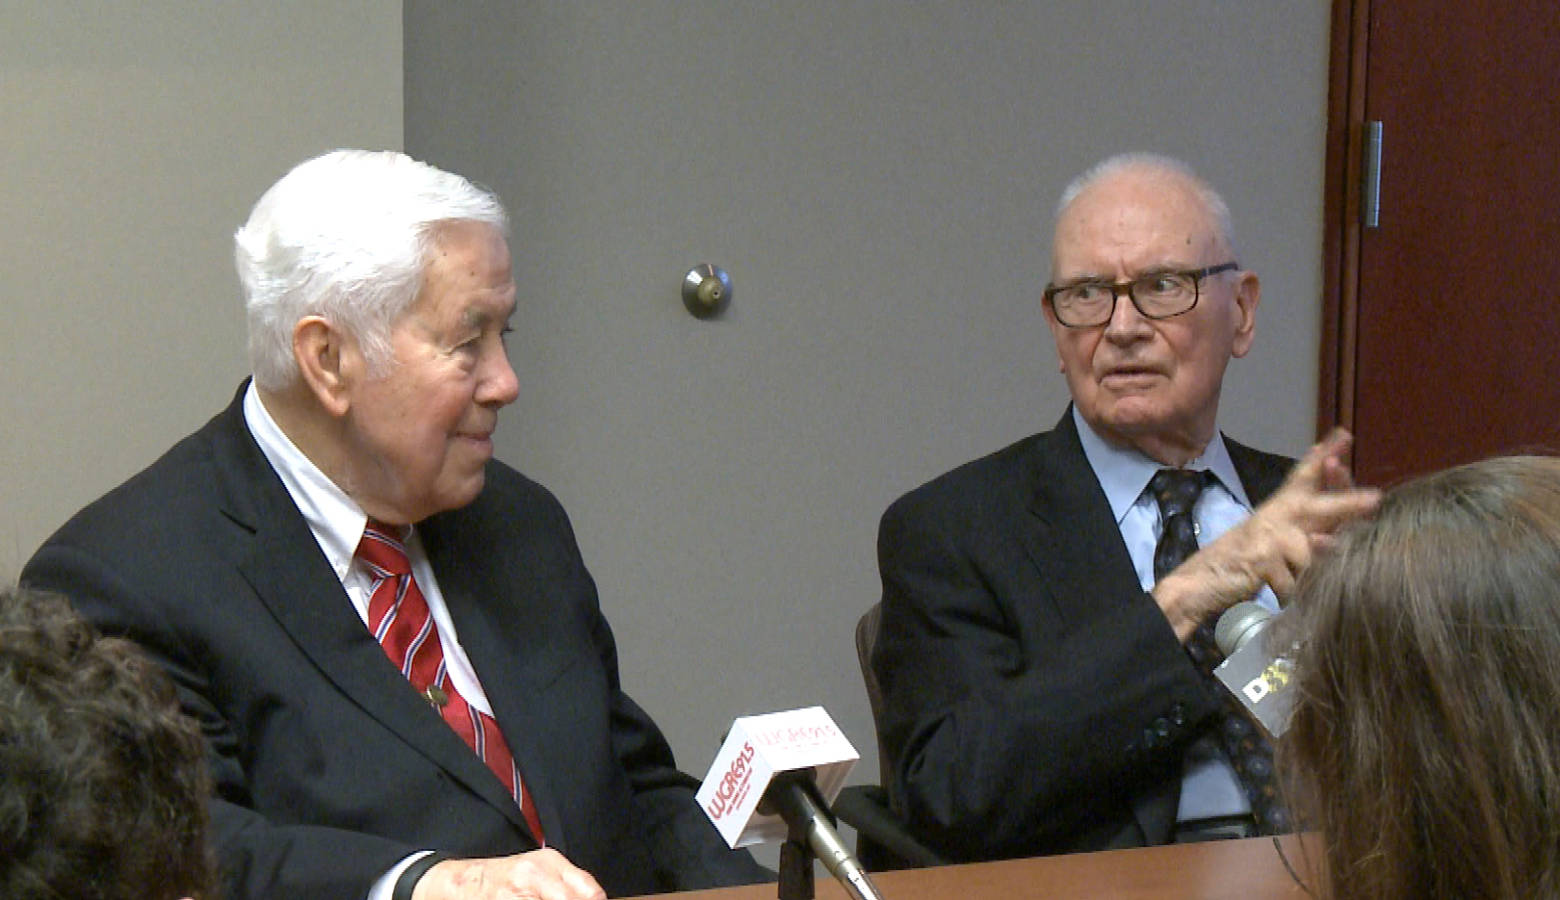 Senator Richard Lugar (left) and Representative Lee Hamilton (right). Indiana University’s Hamilton Lugar School of Global and International Studies is named after both lawmakers (Brock Turner/WTIU)